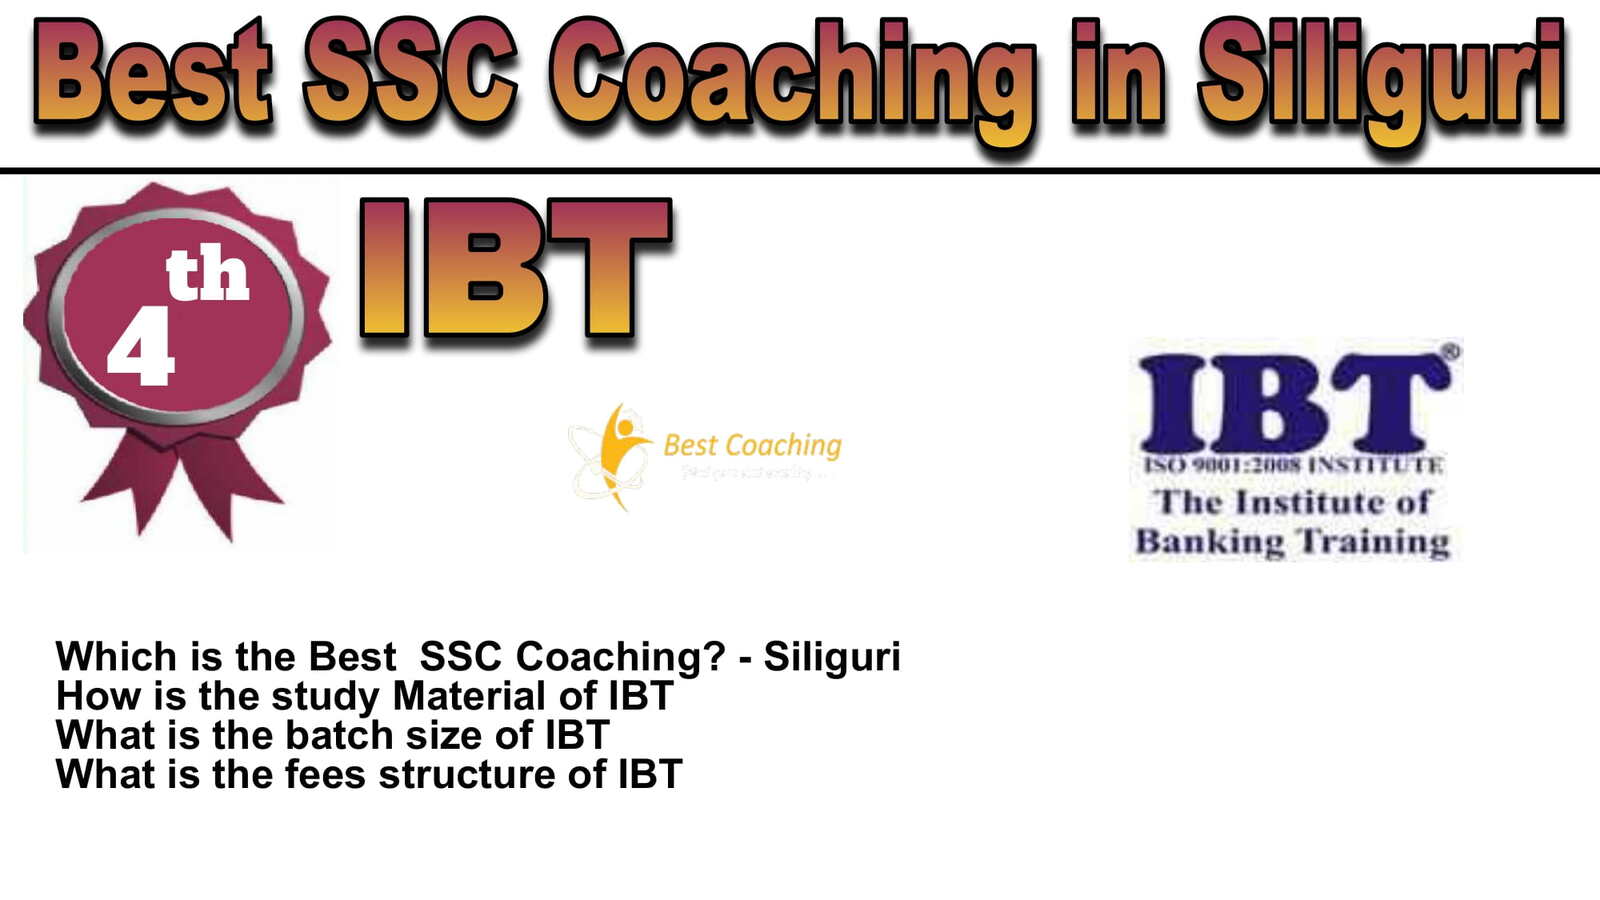 Rank 4 Best SSC Coaching in Siliguri